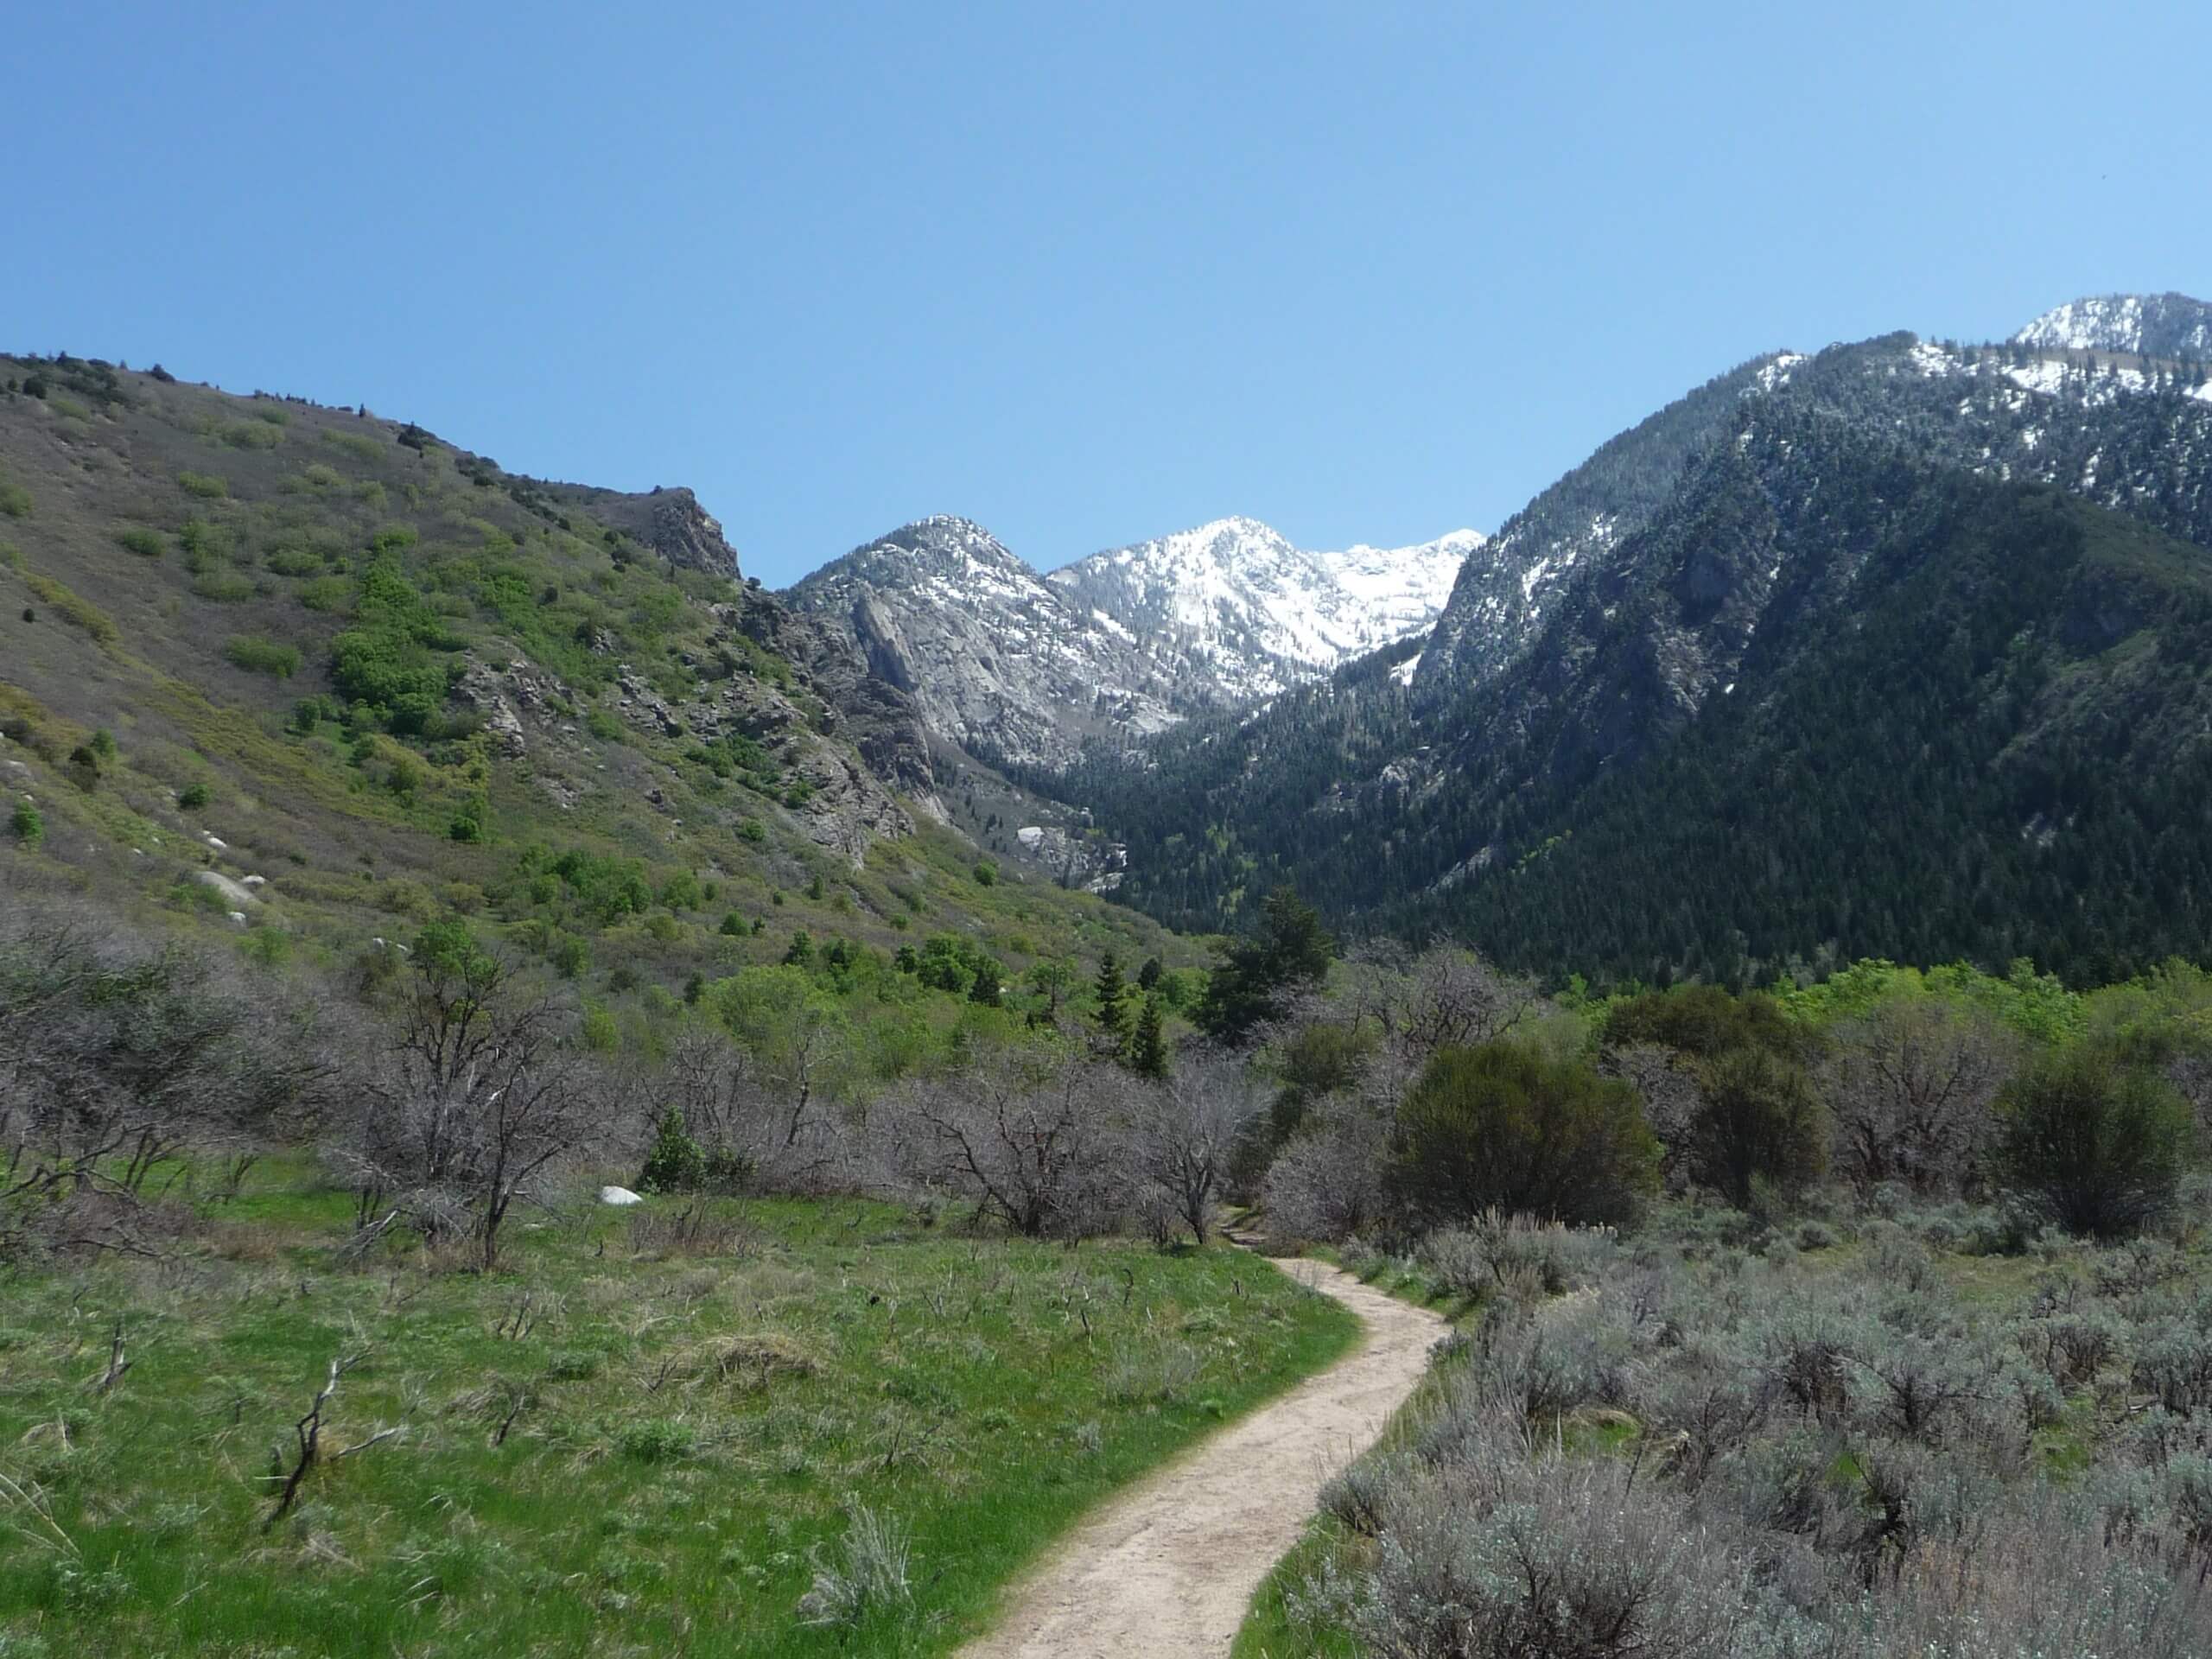 Bells Canyon Trail to Ridgeline